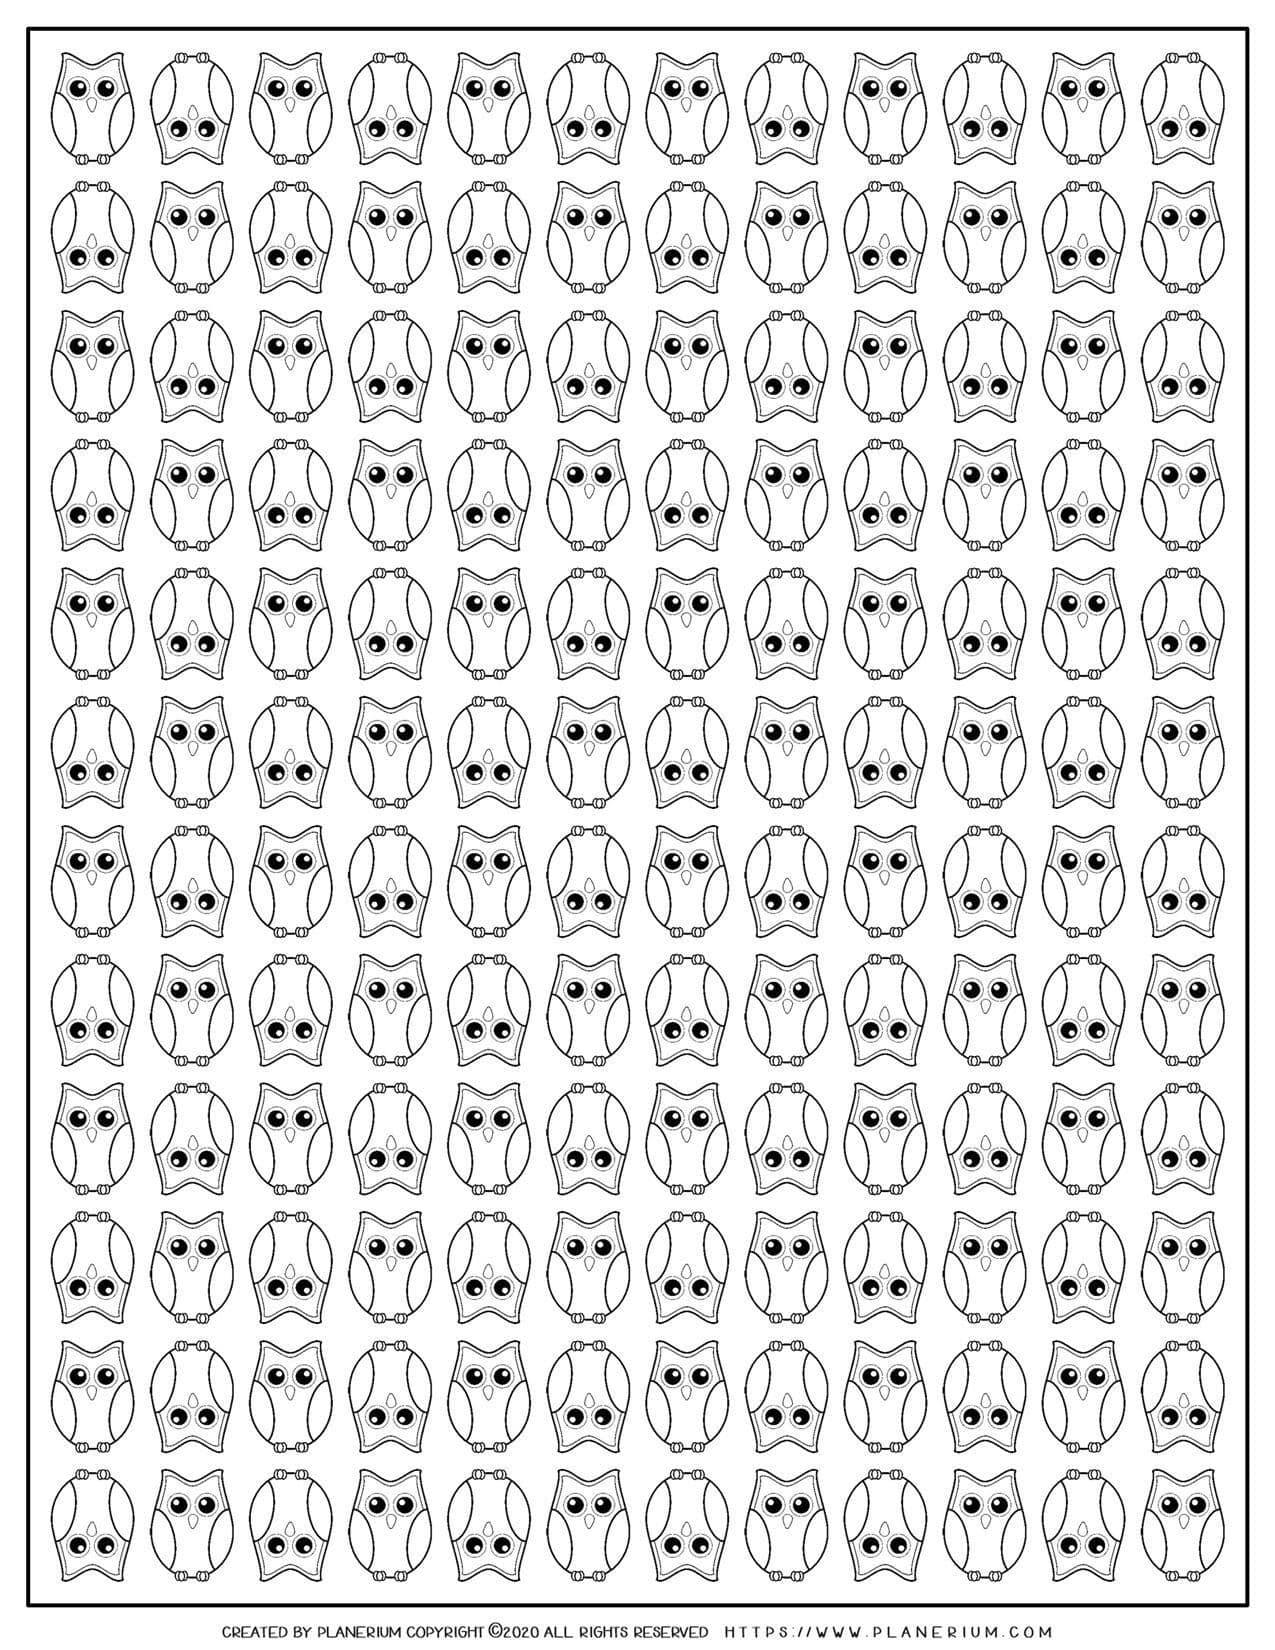 Owl Pattern | Planerium